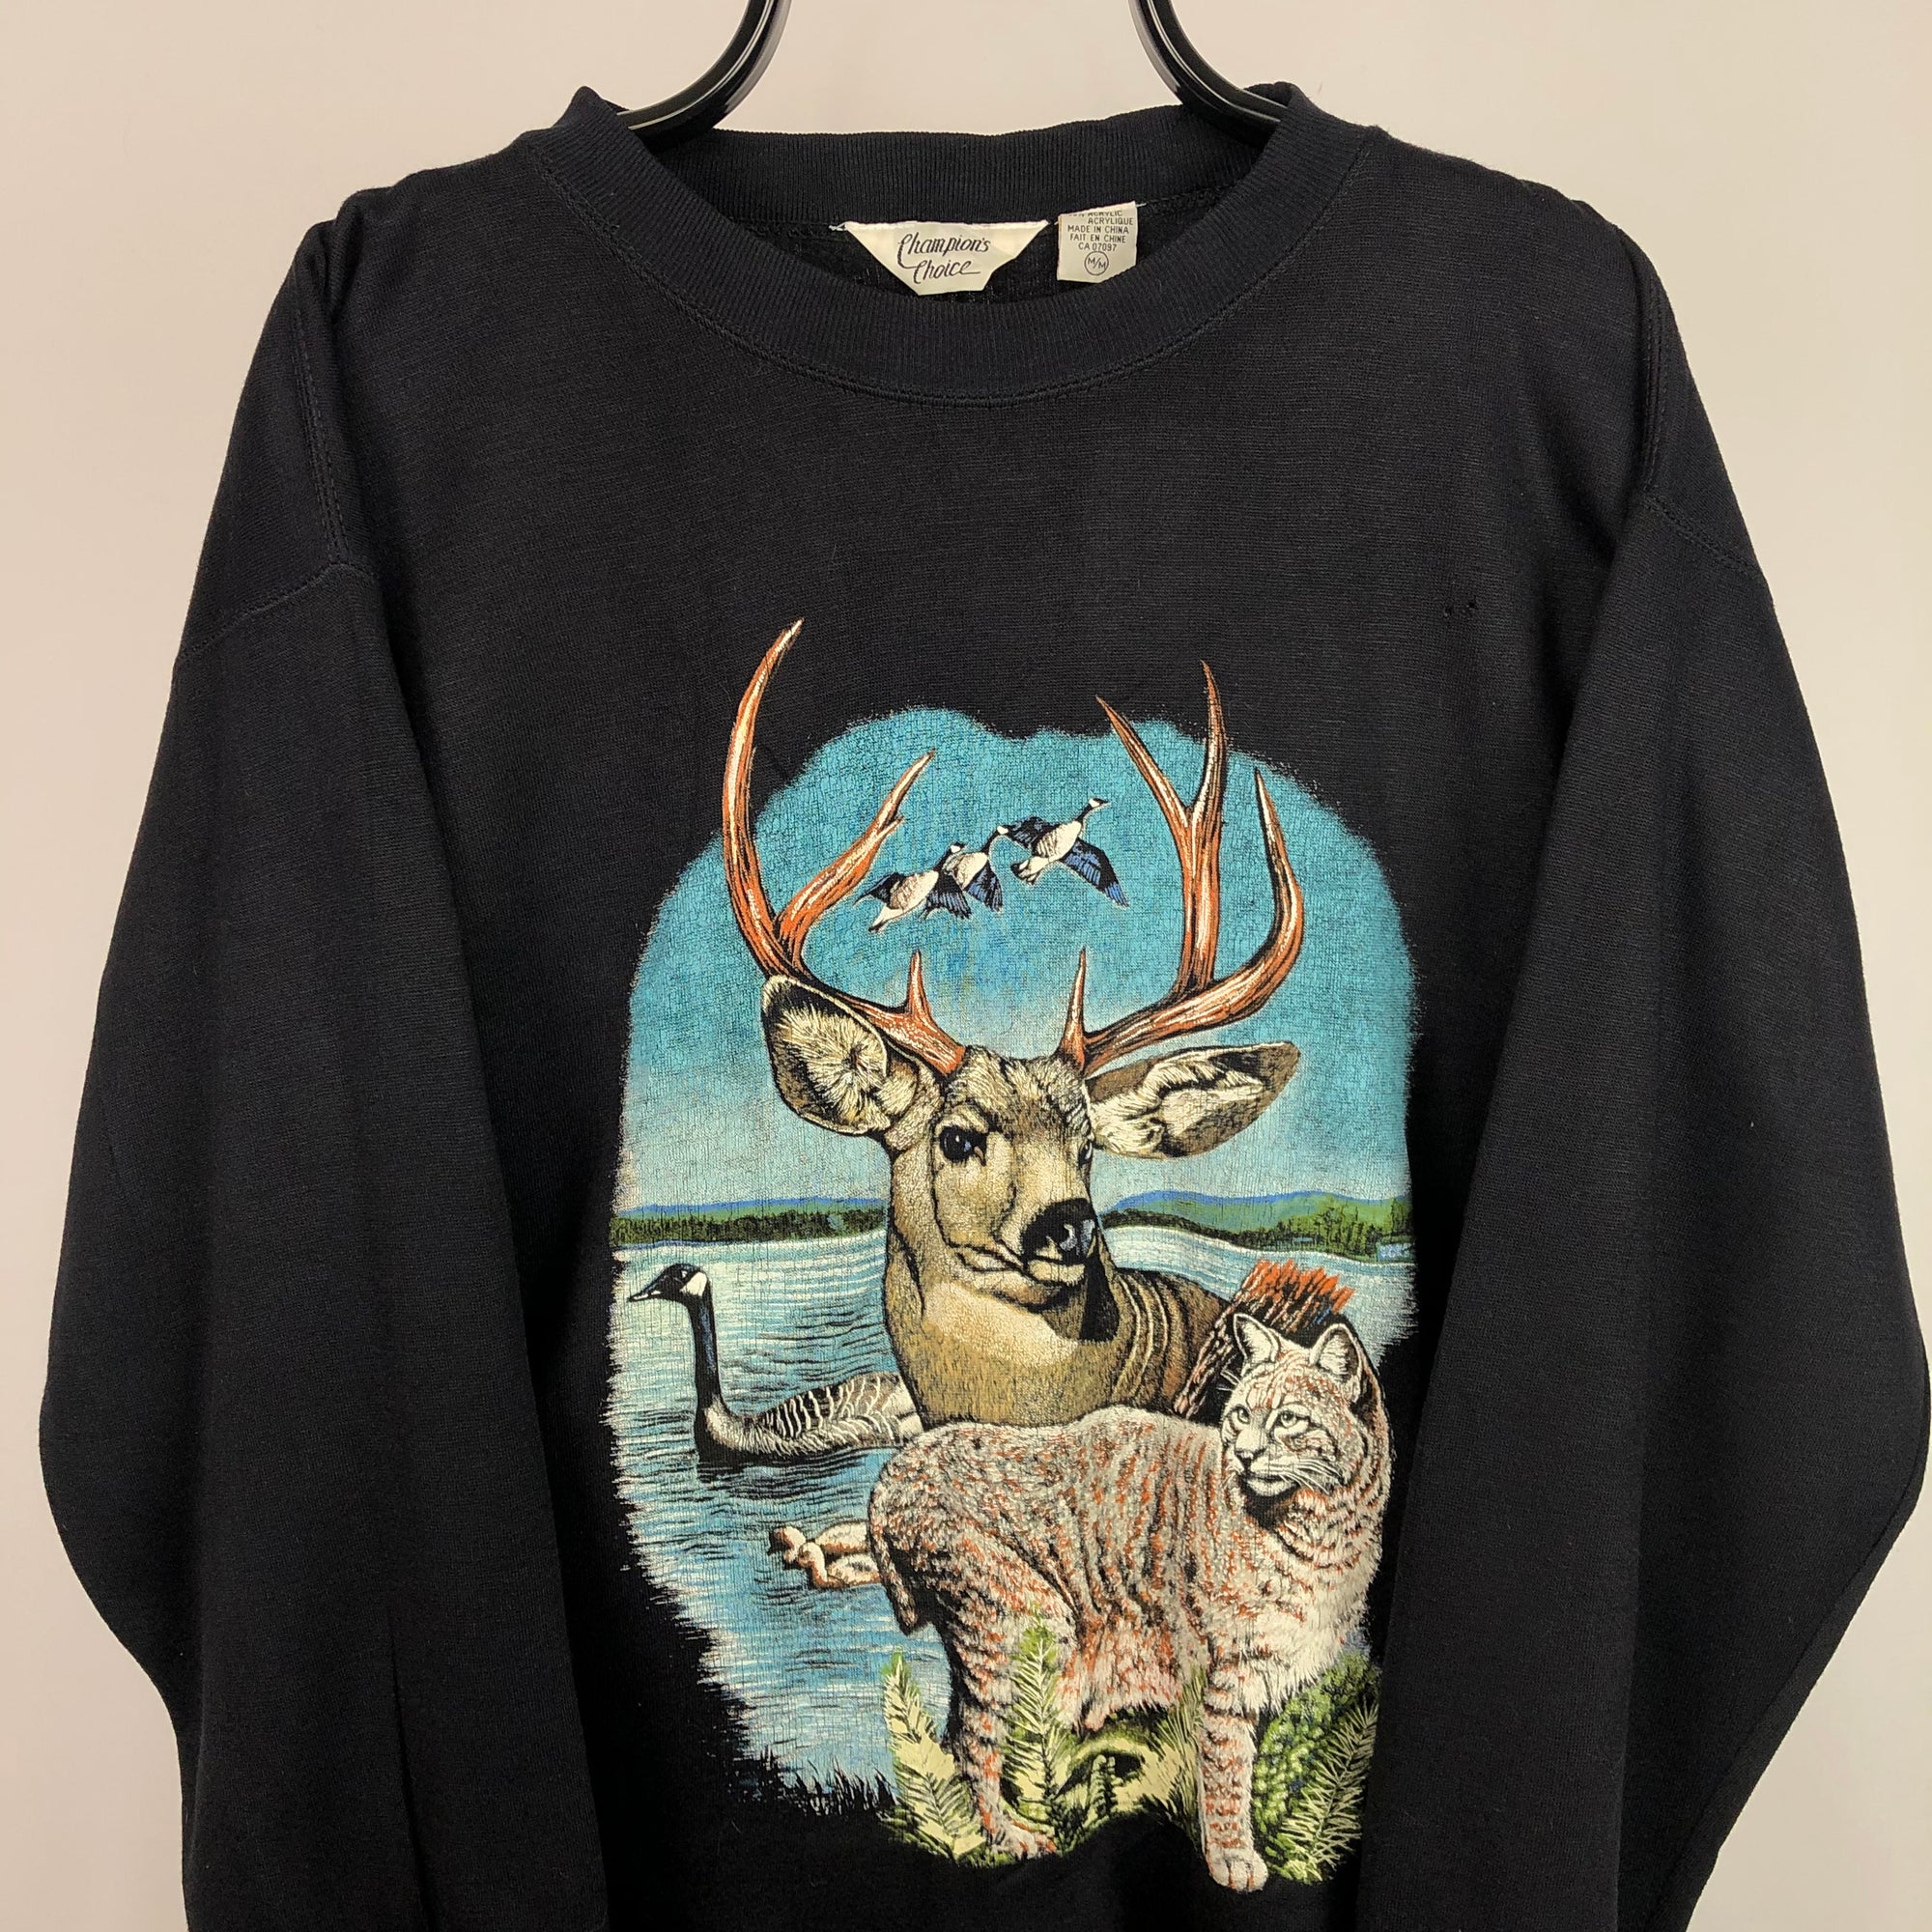 Vintage 90s Wildlife Print Sweatshirt in Black - Men's Medium/Women's Large